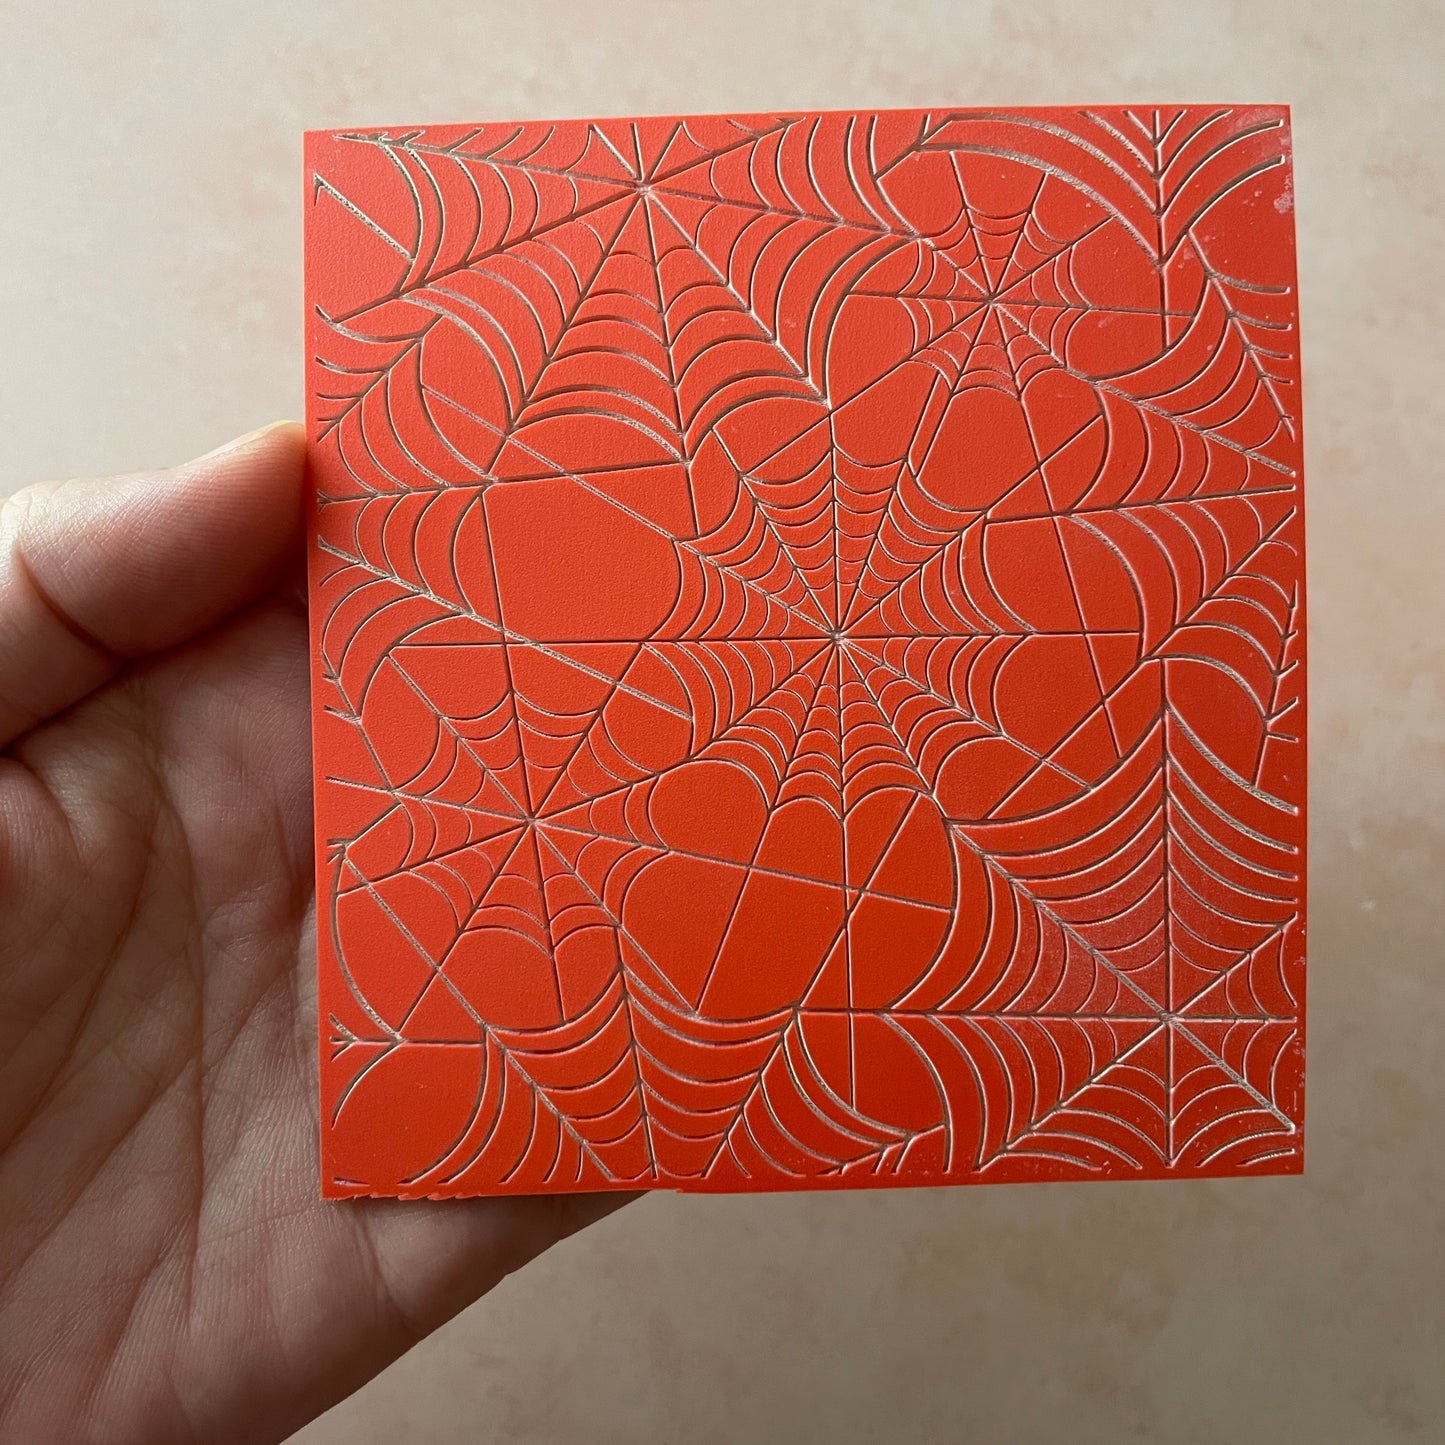 Webs Rubber Stamp Texture Sheet Mat for polymer clay metal clay mixed media art Halloween